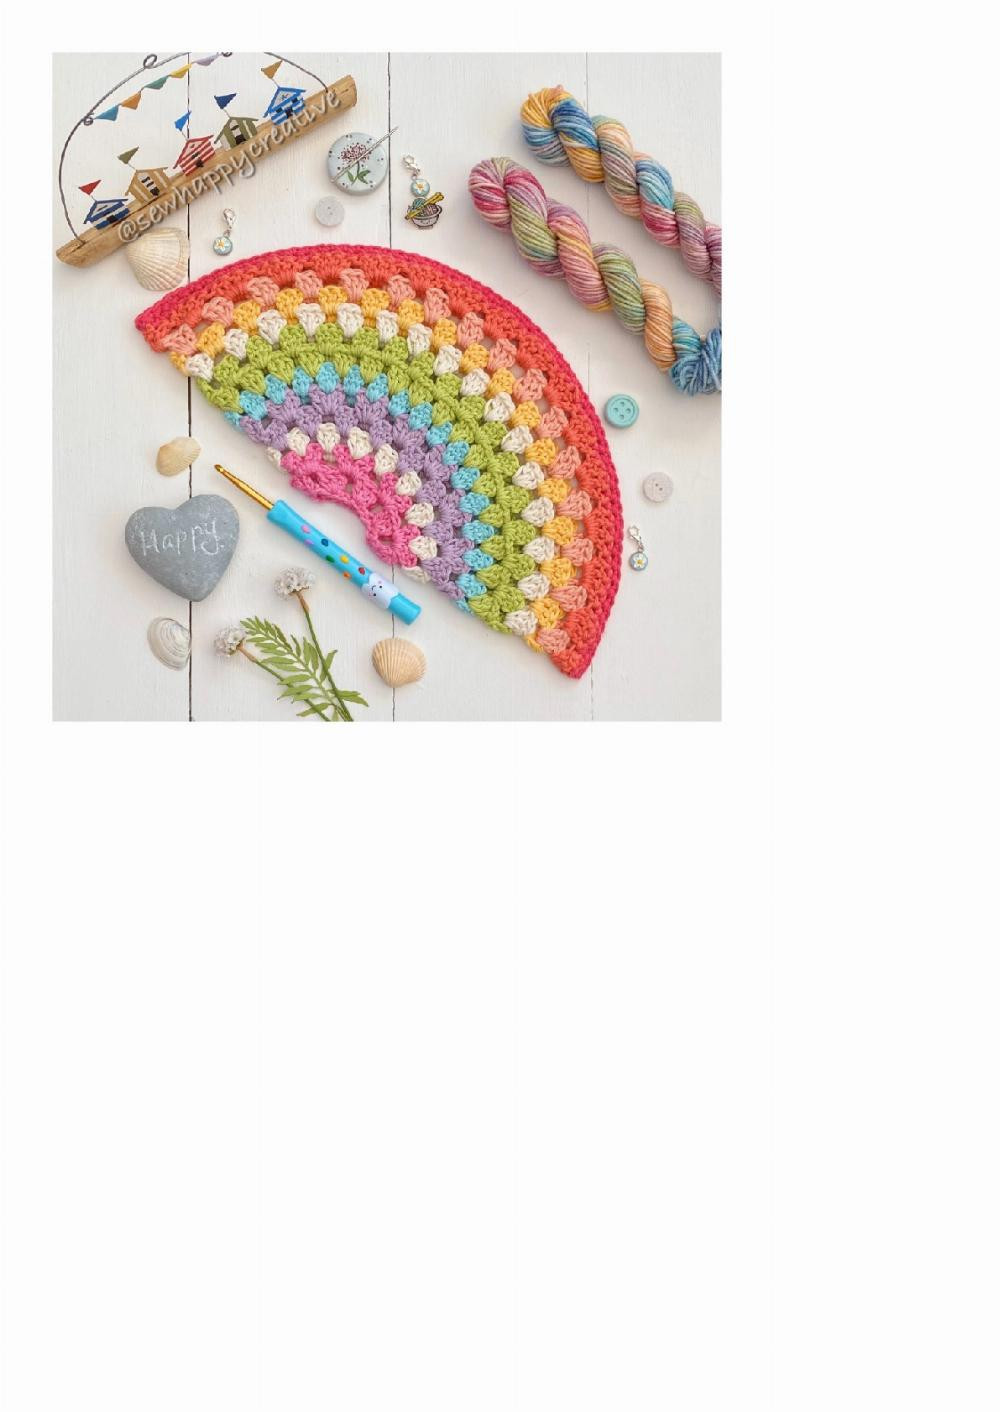 Granny Rainbow crochet pattern